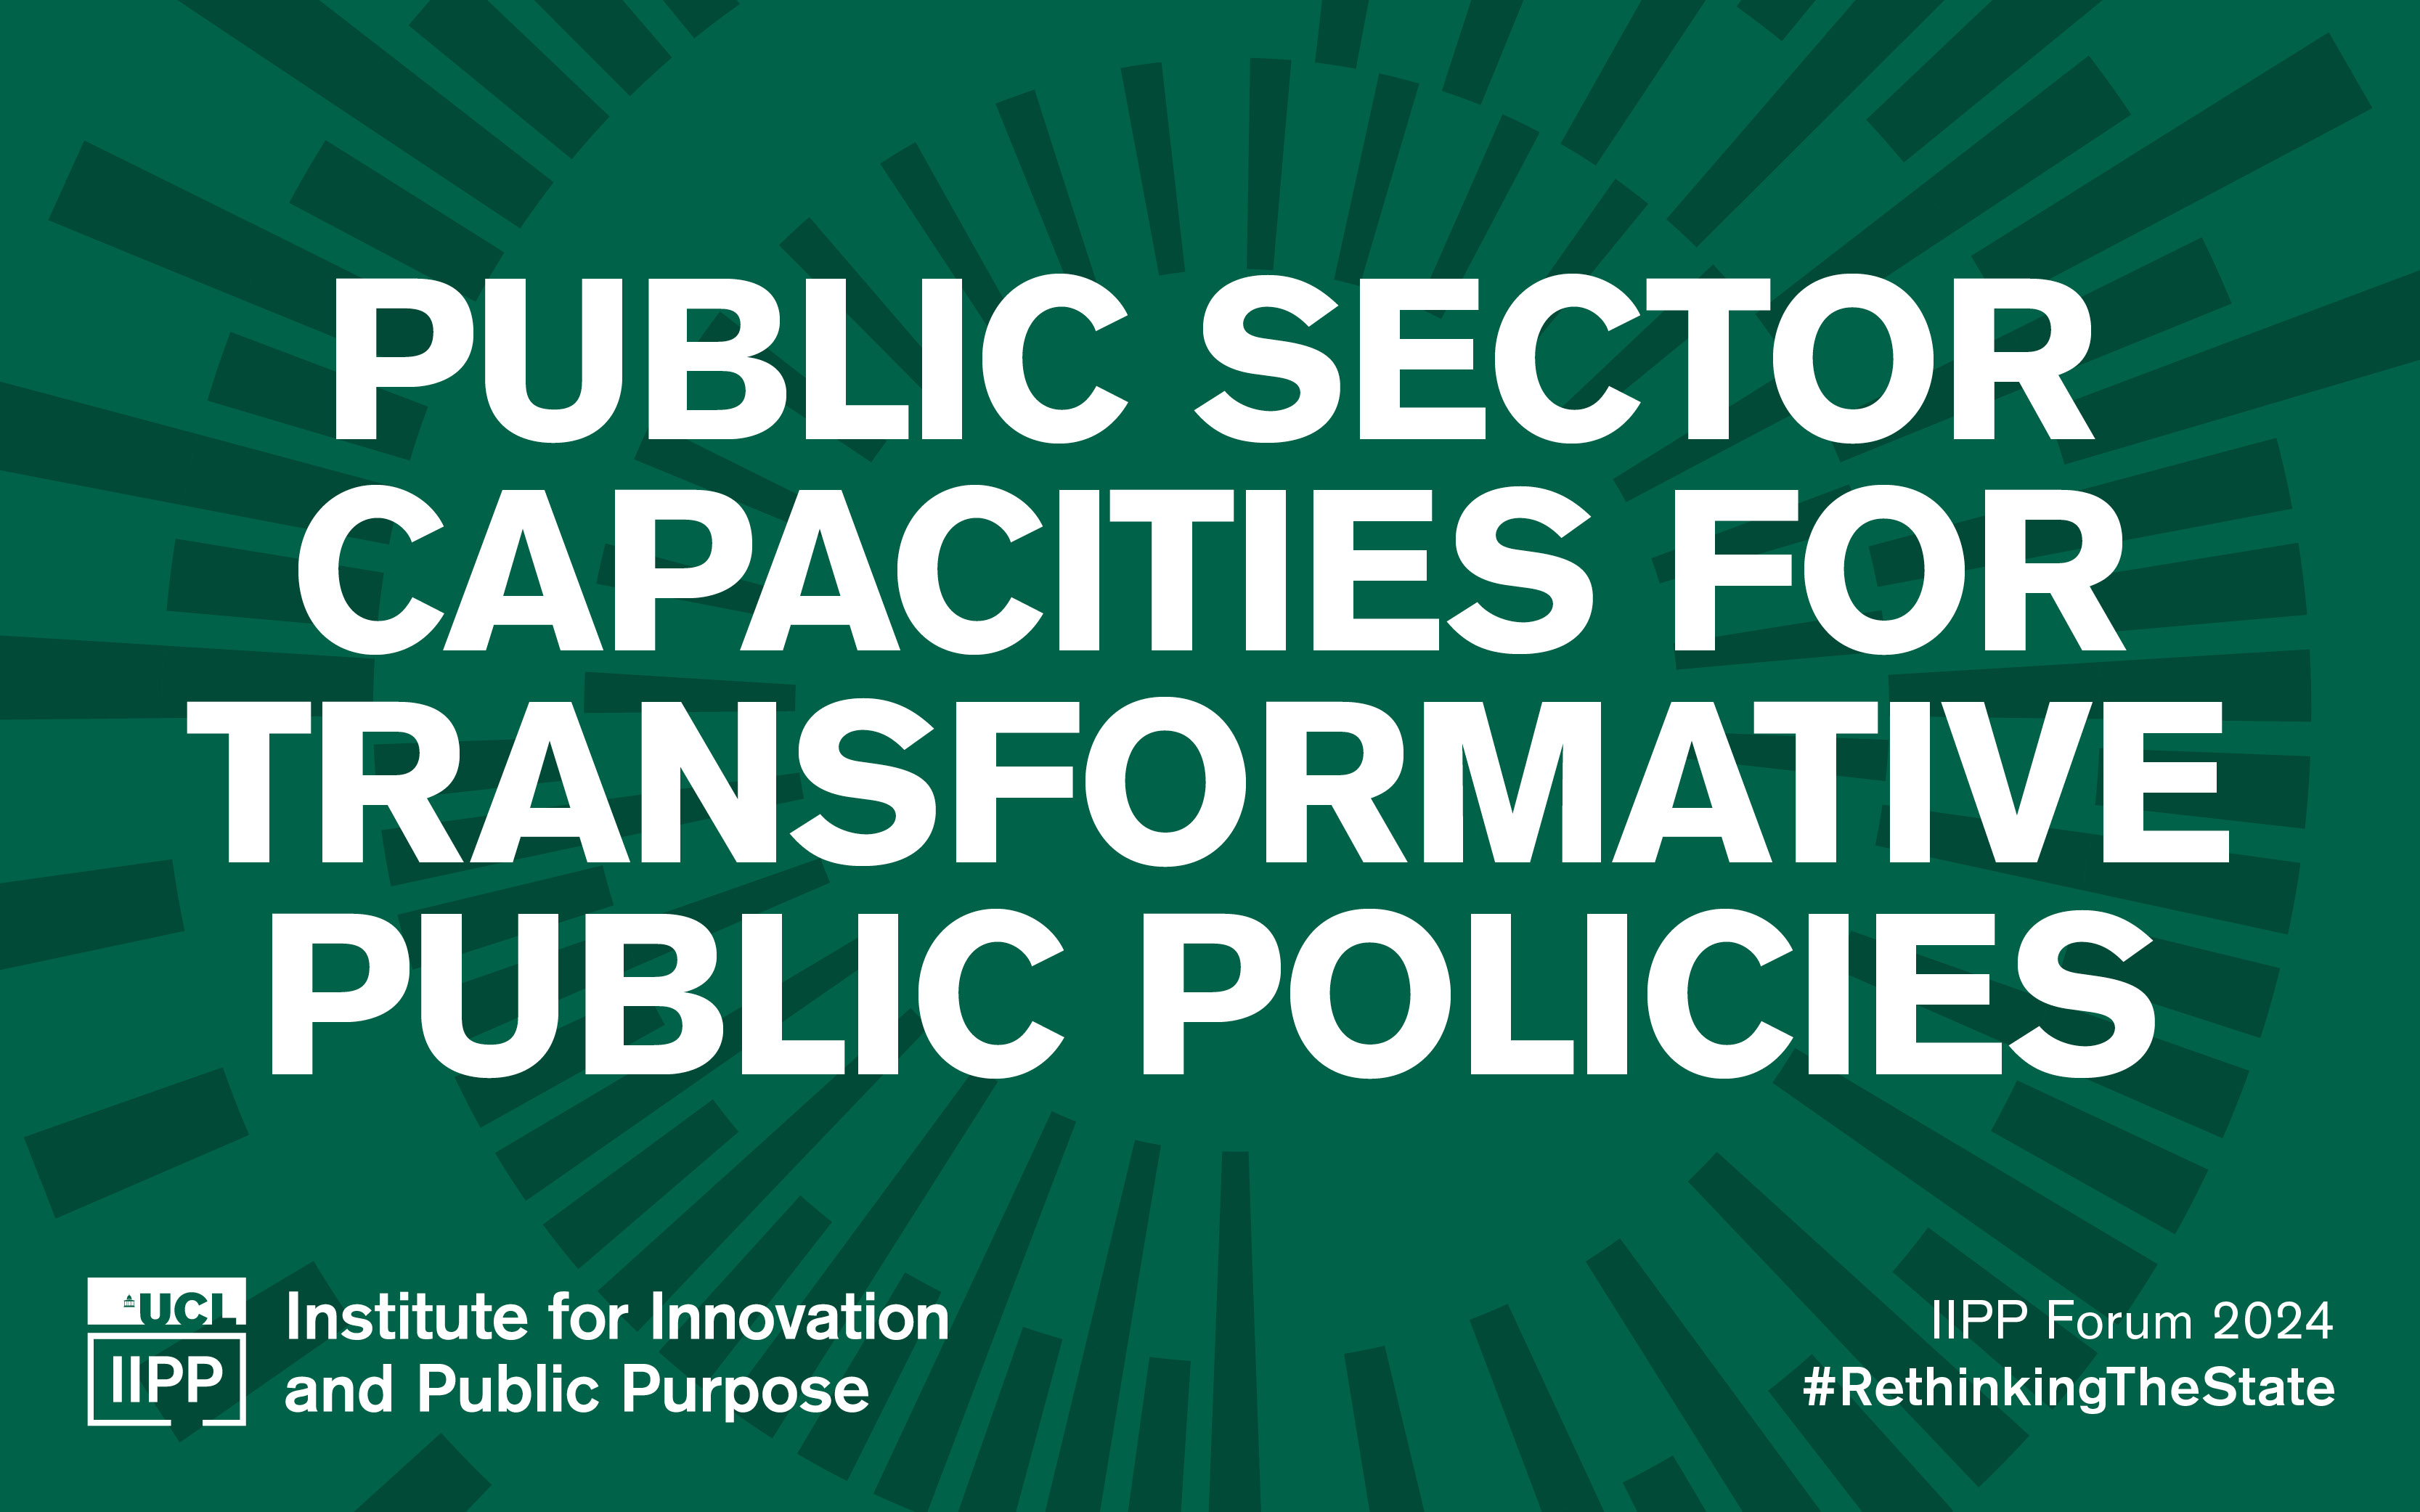 Public sector capacities for transformative public policies